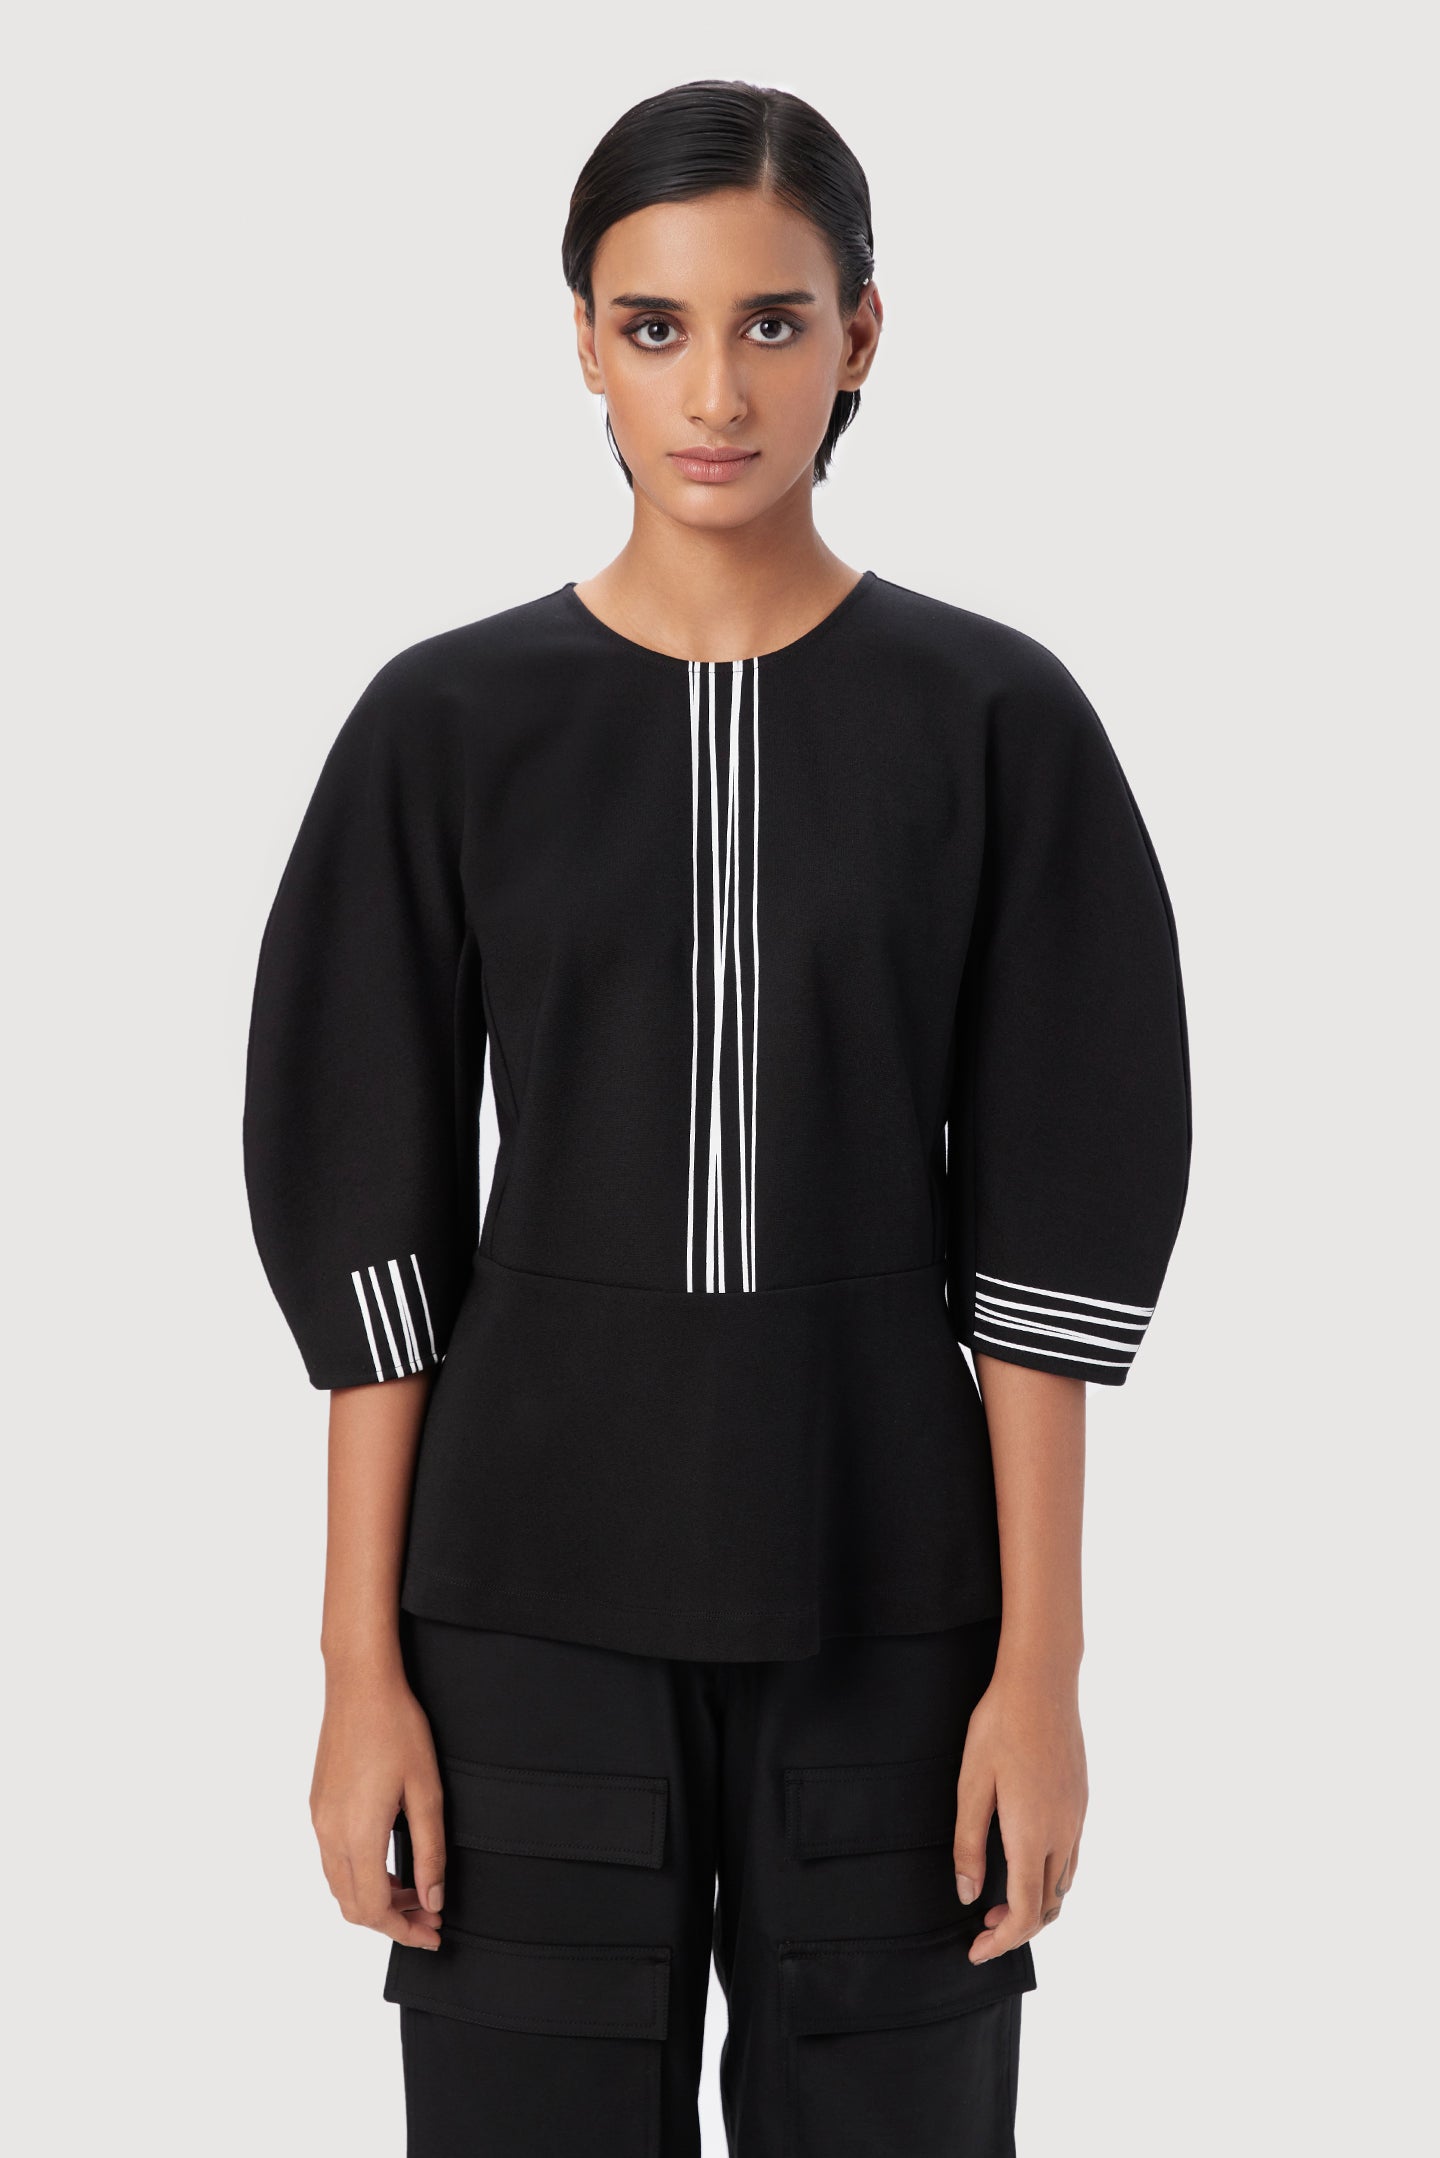 Easy Fit Round Neck Sweatshirt With Stylish Line Print